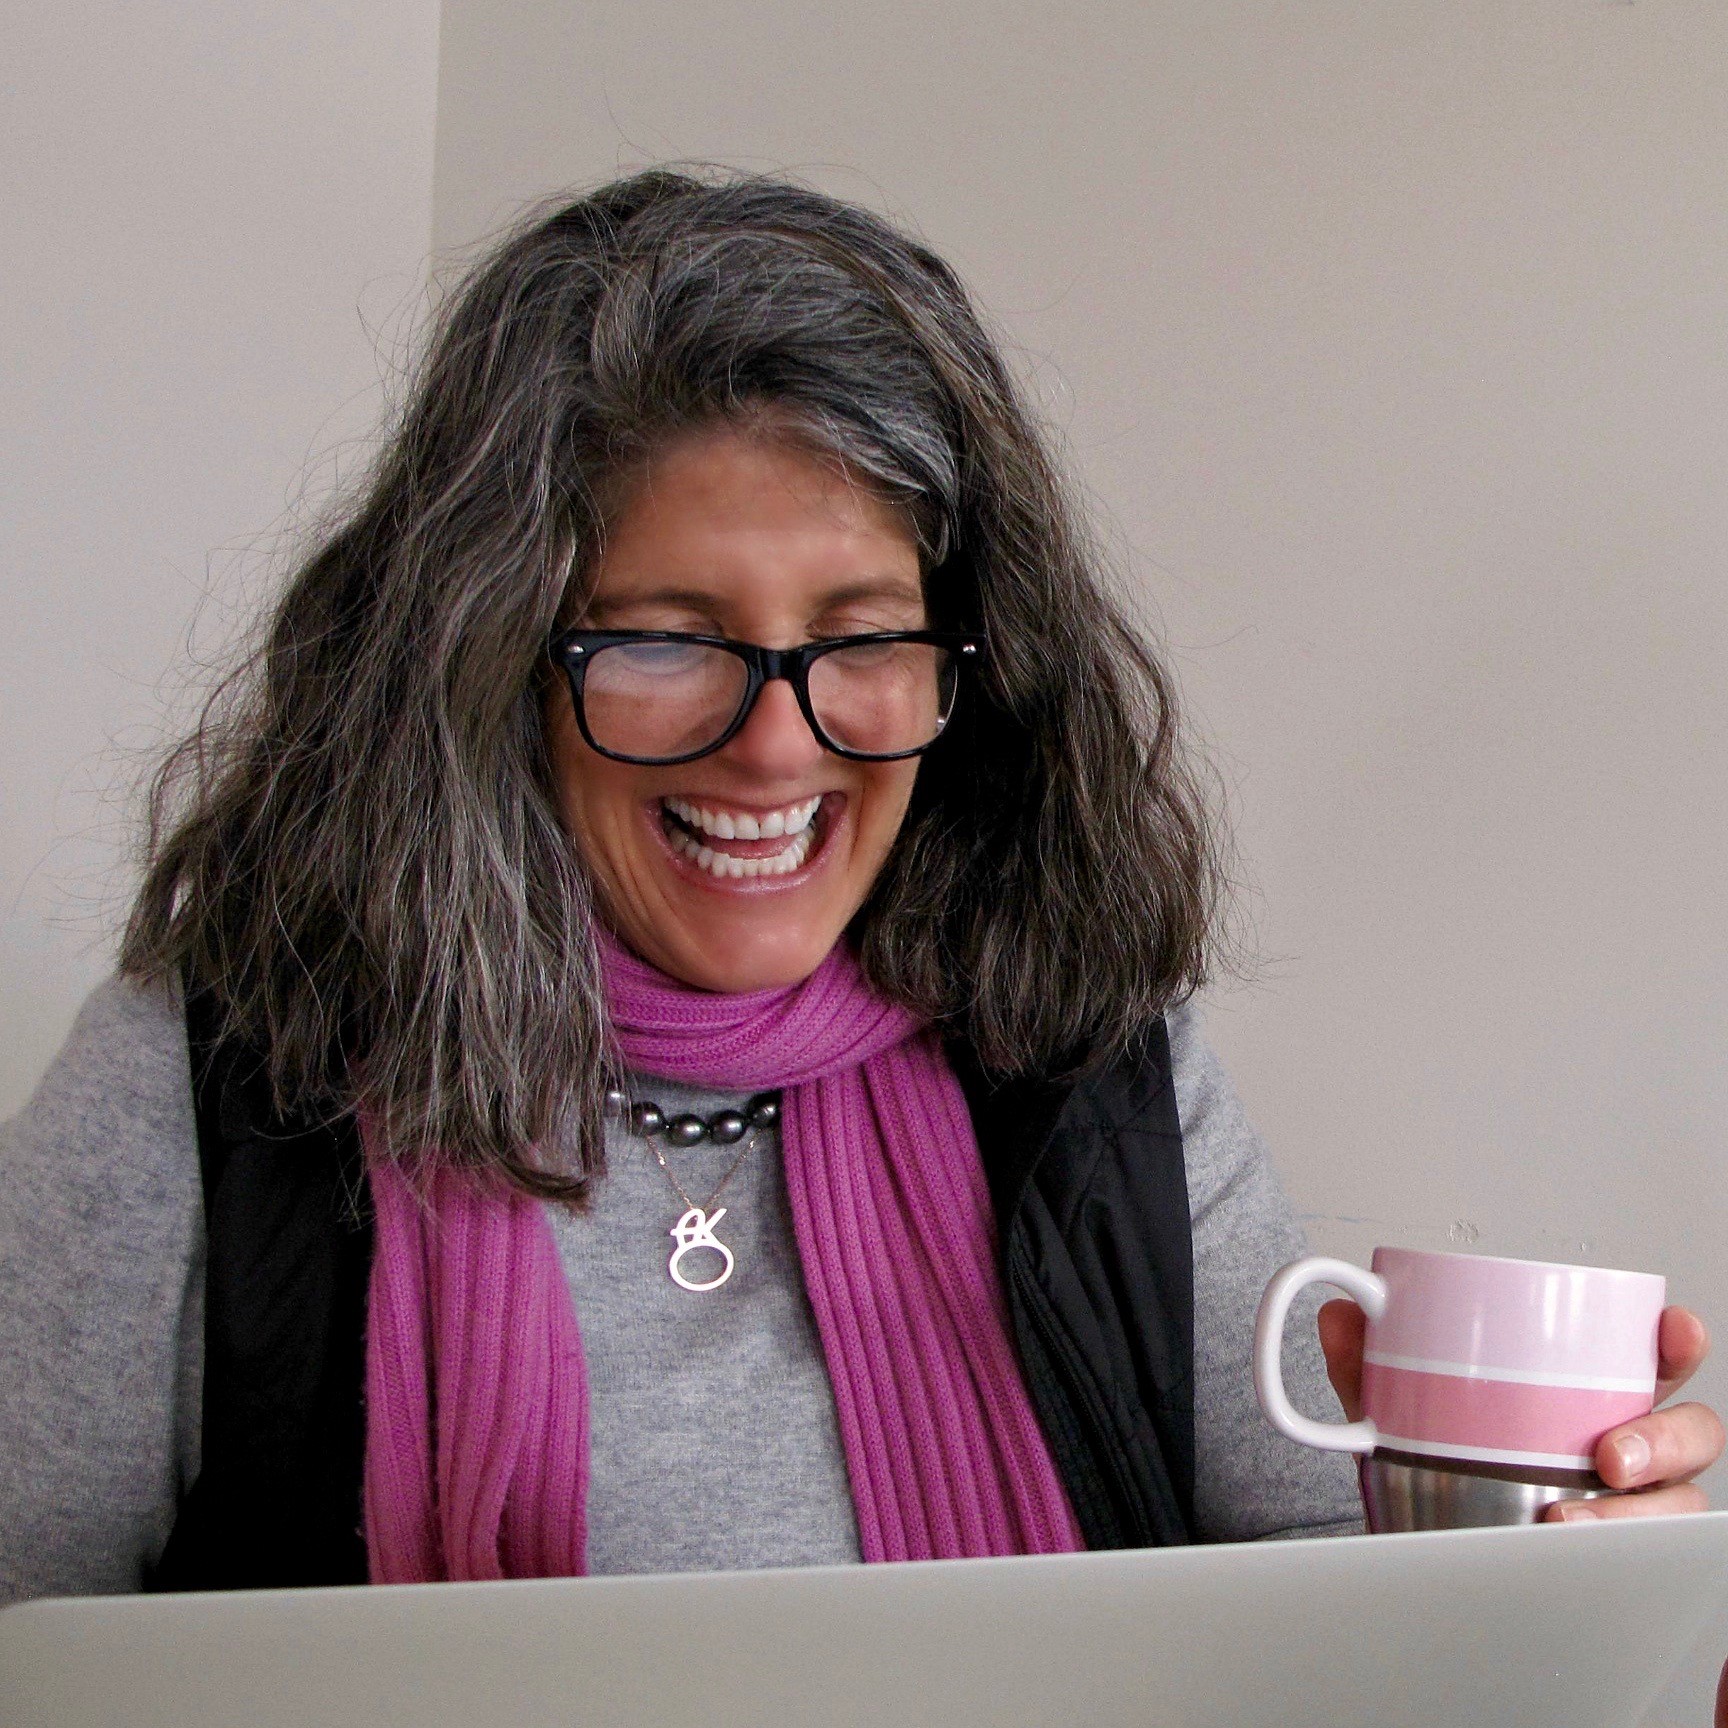 Amy Kellogg laughs while holding a pink mug